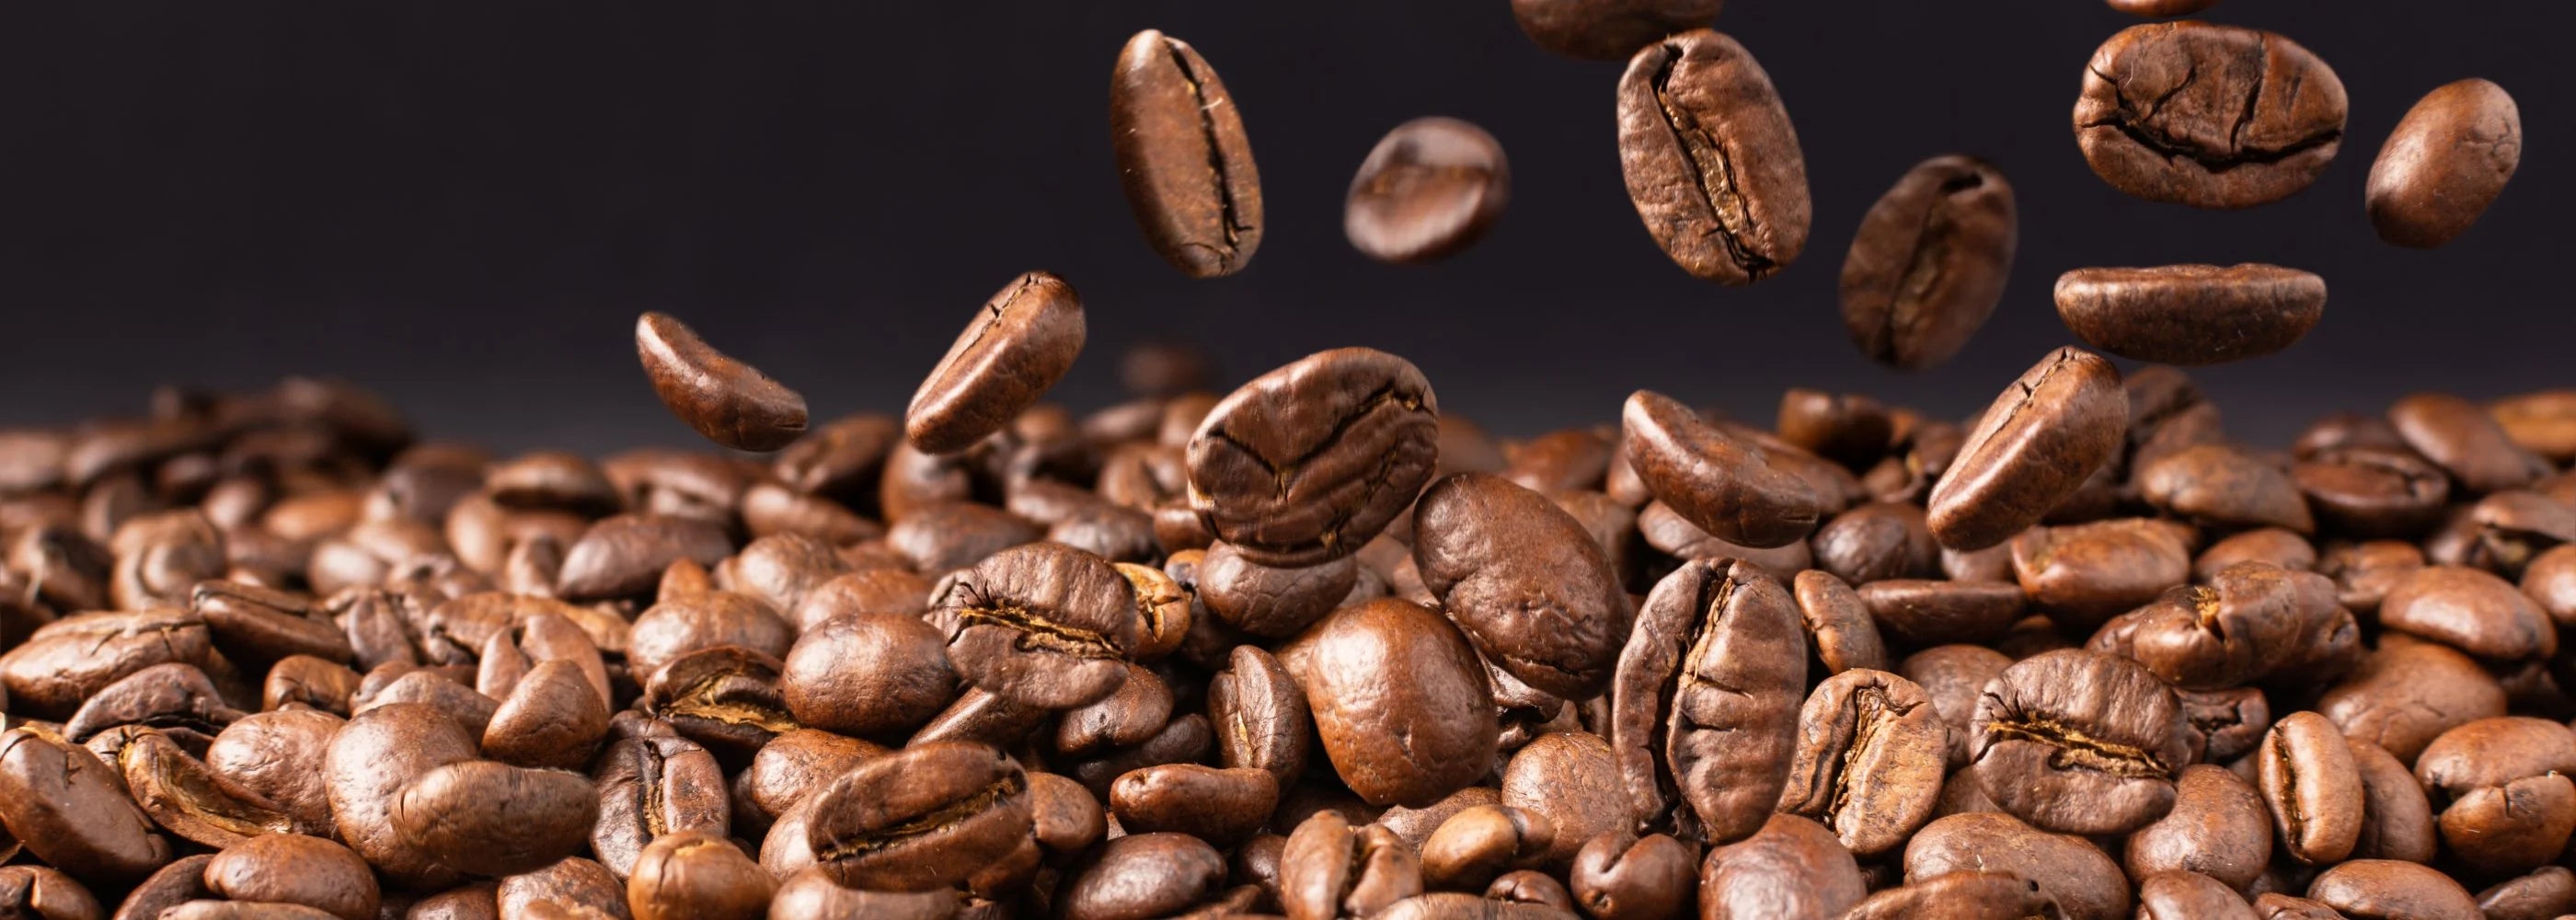 Meistverkaufter gemahlener Kaffee